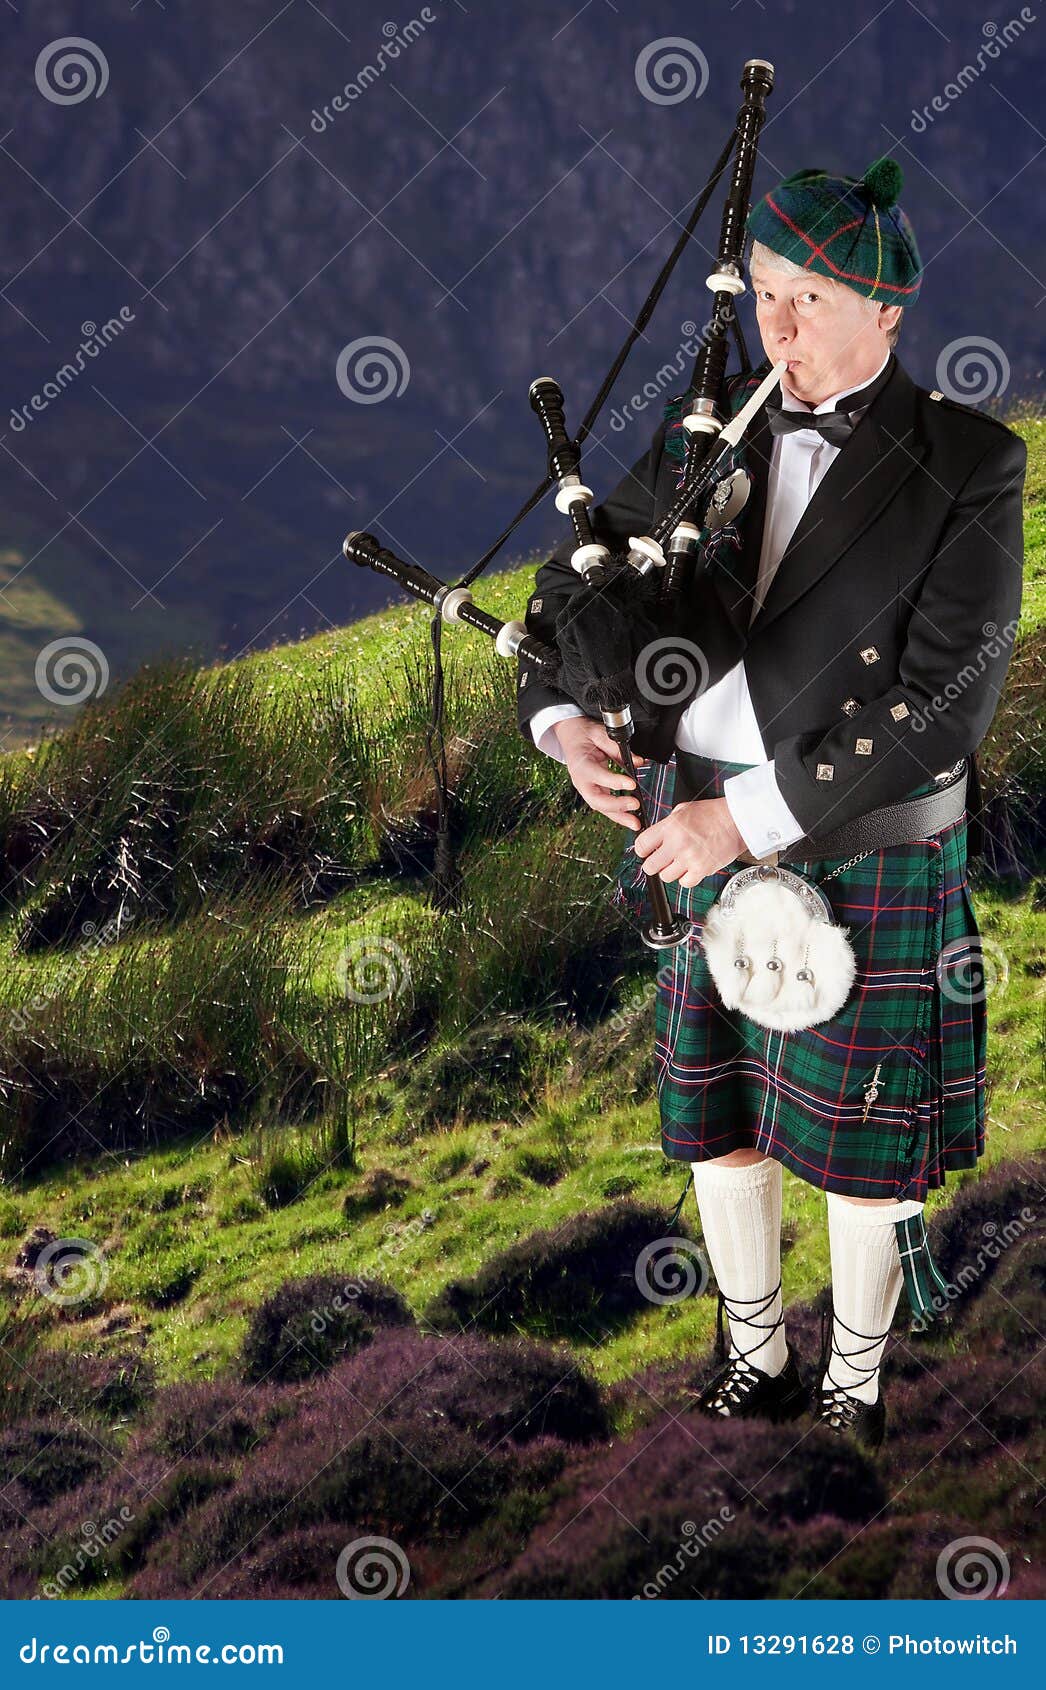 highlander music